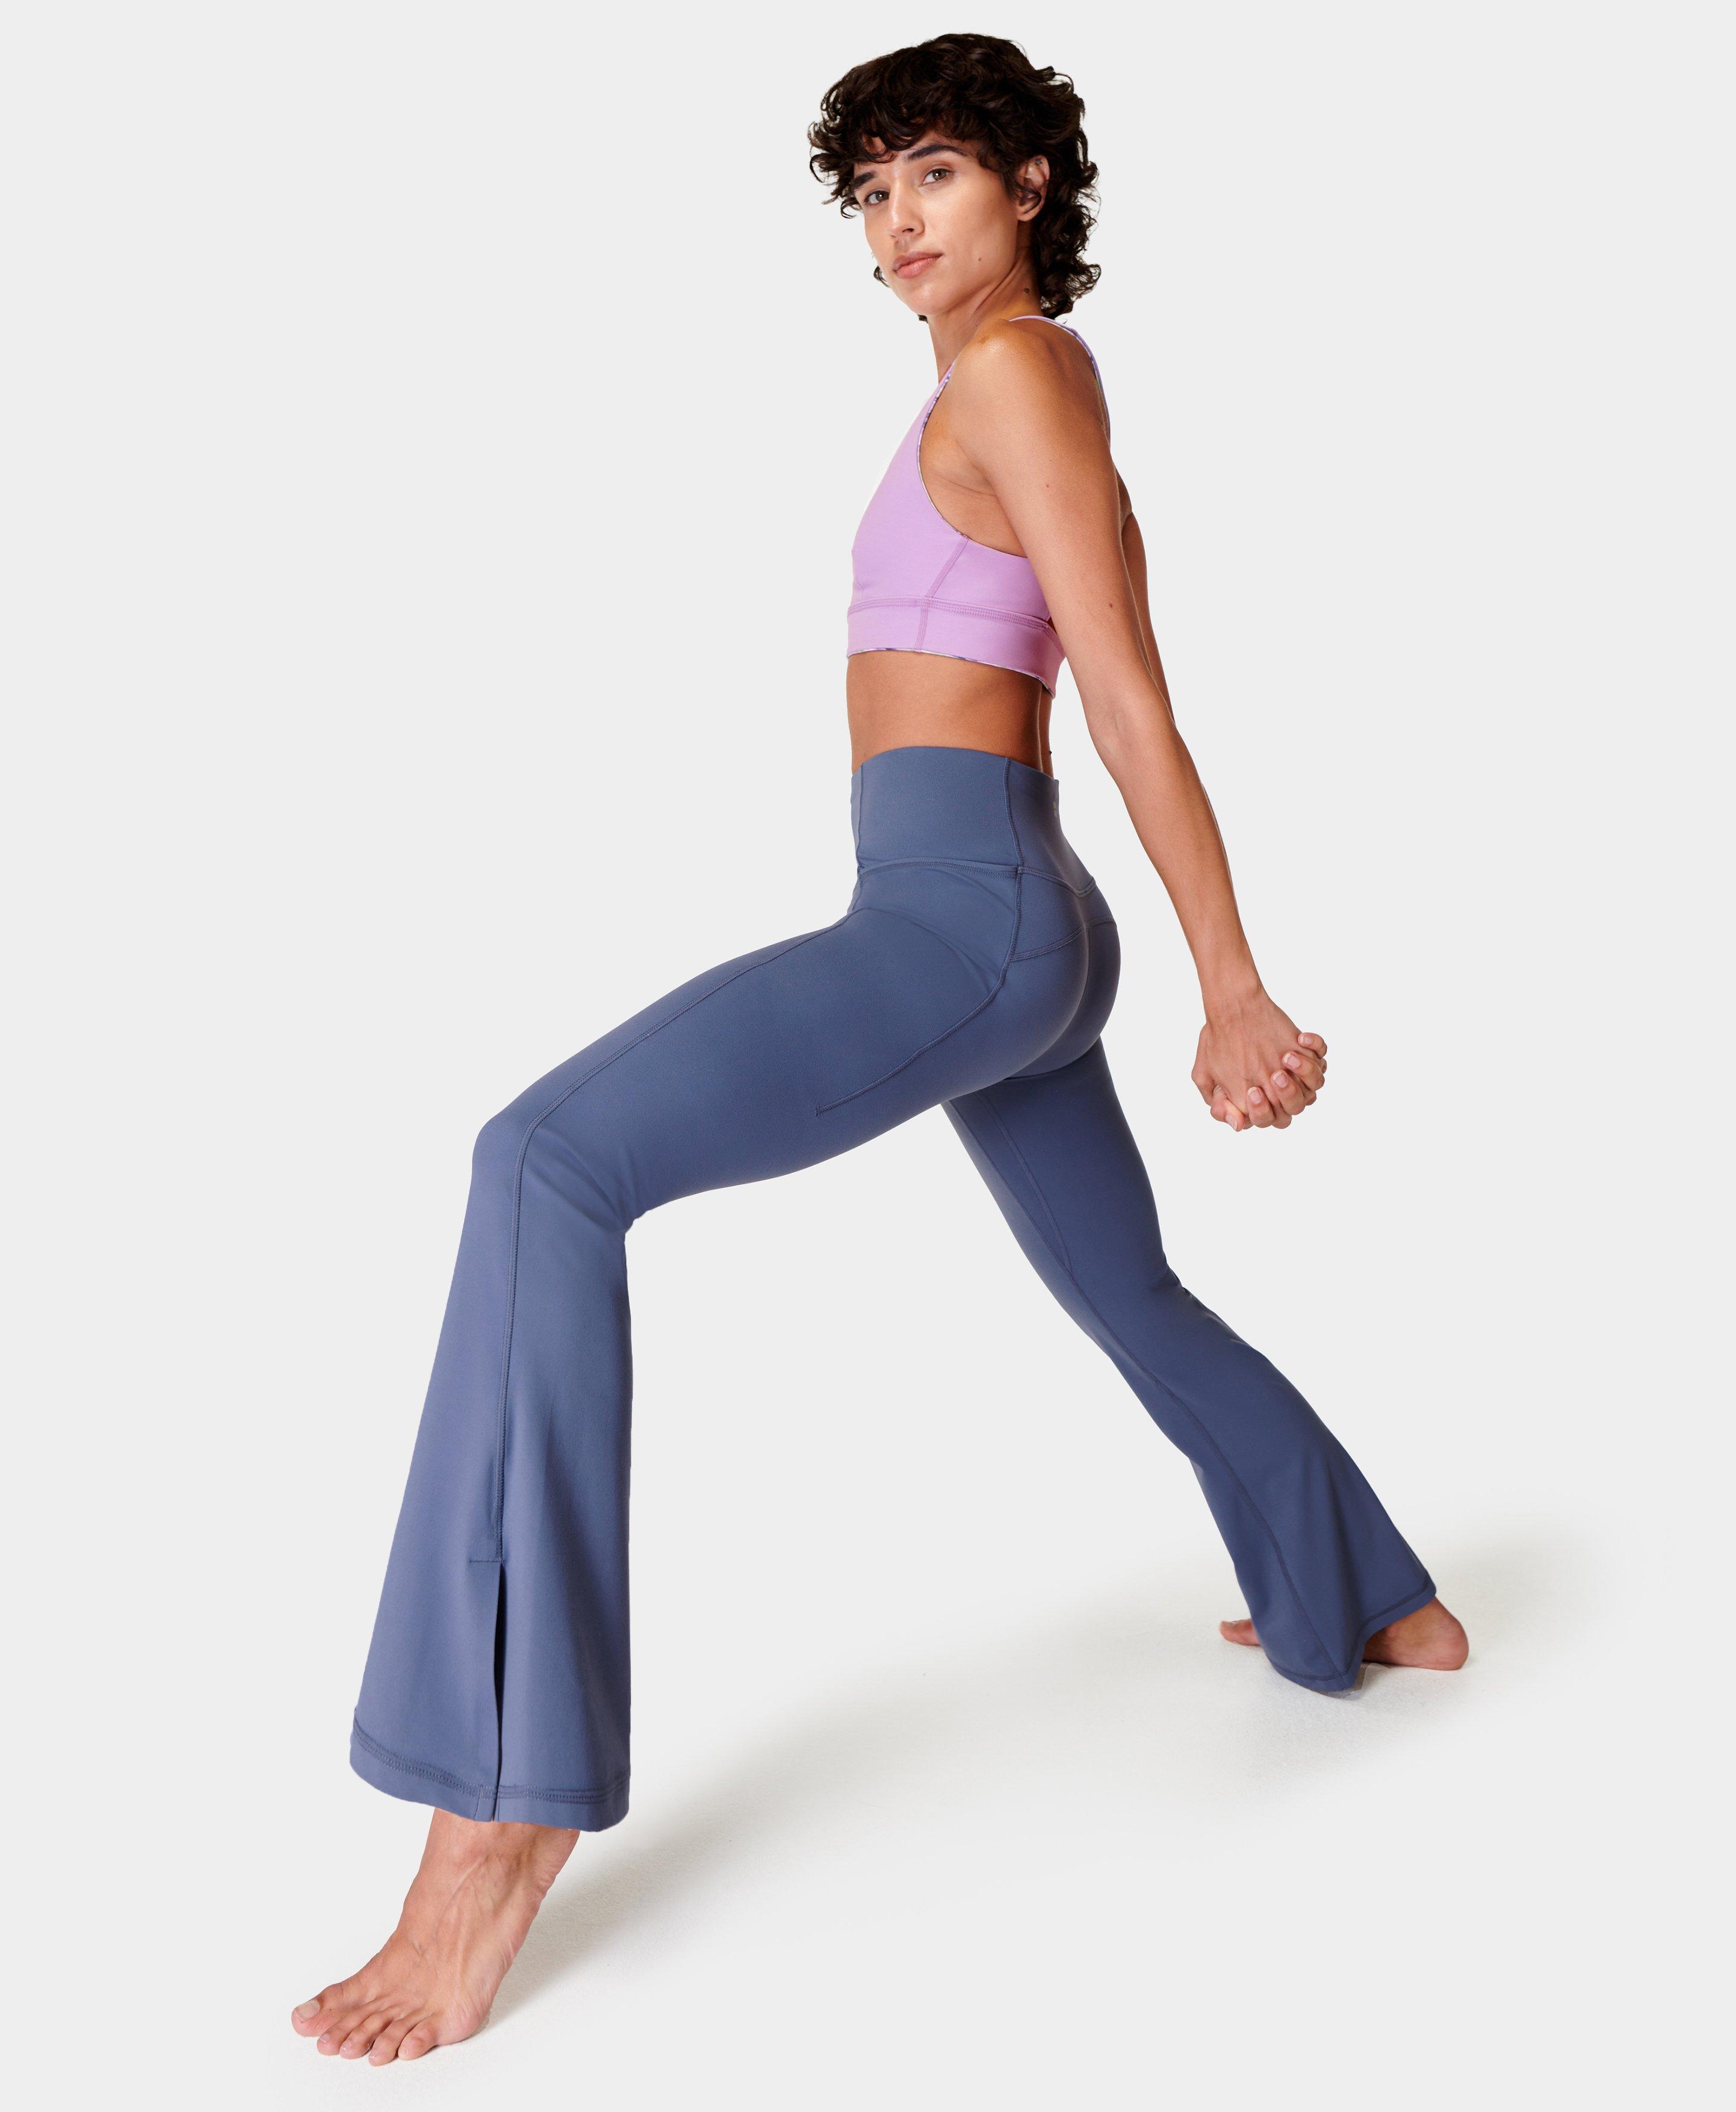 TNNZEET Women's Flare Yoga Pants, Bootcut High Waisted Casual